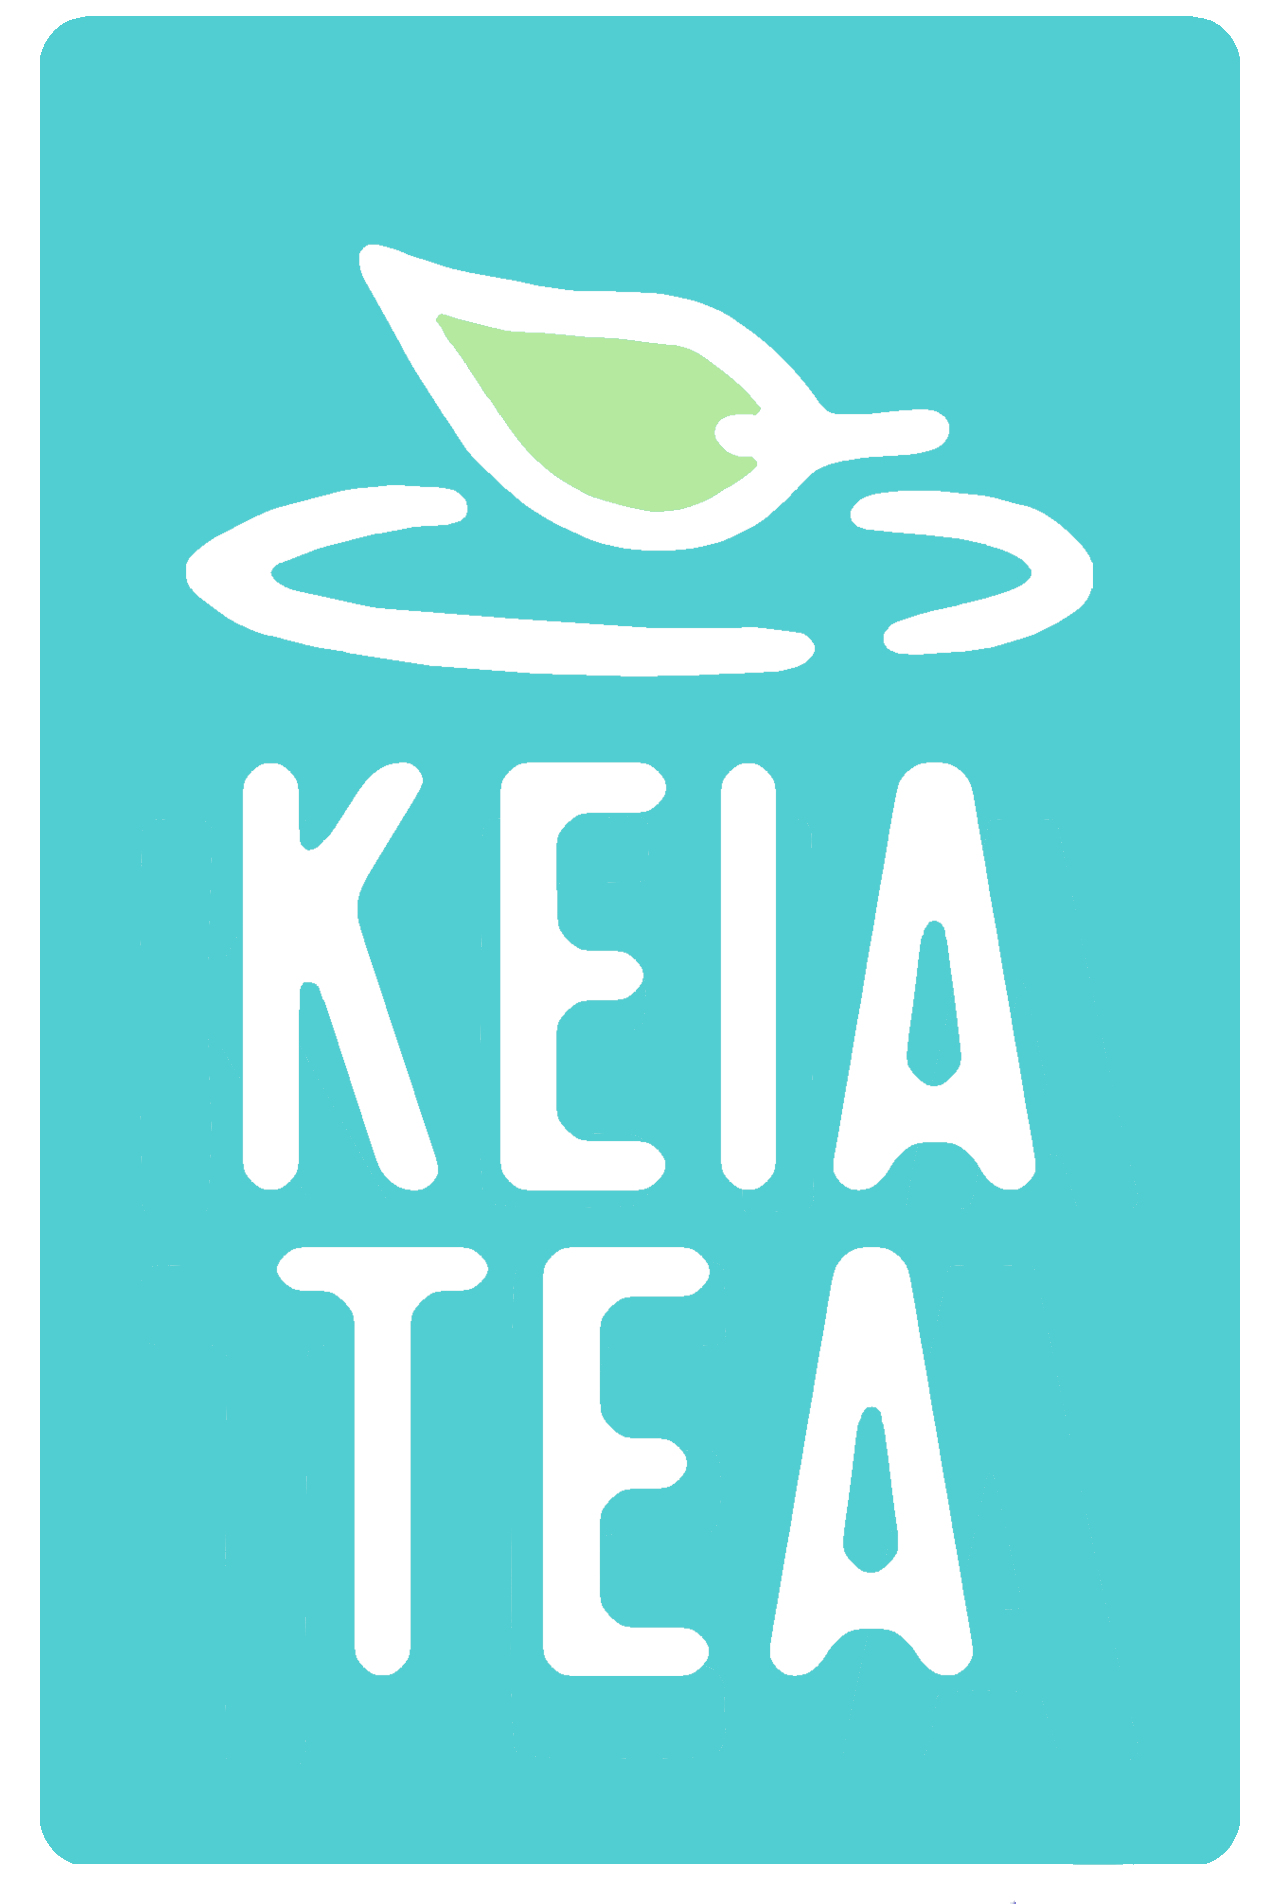 Keia Tea